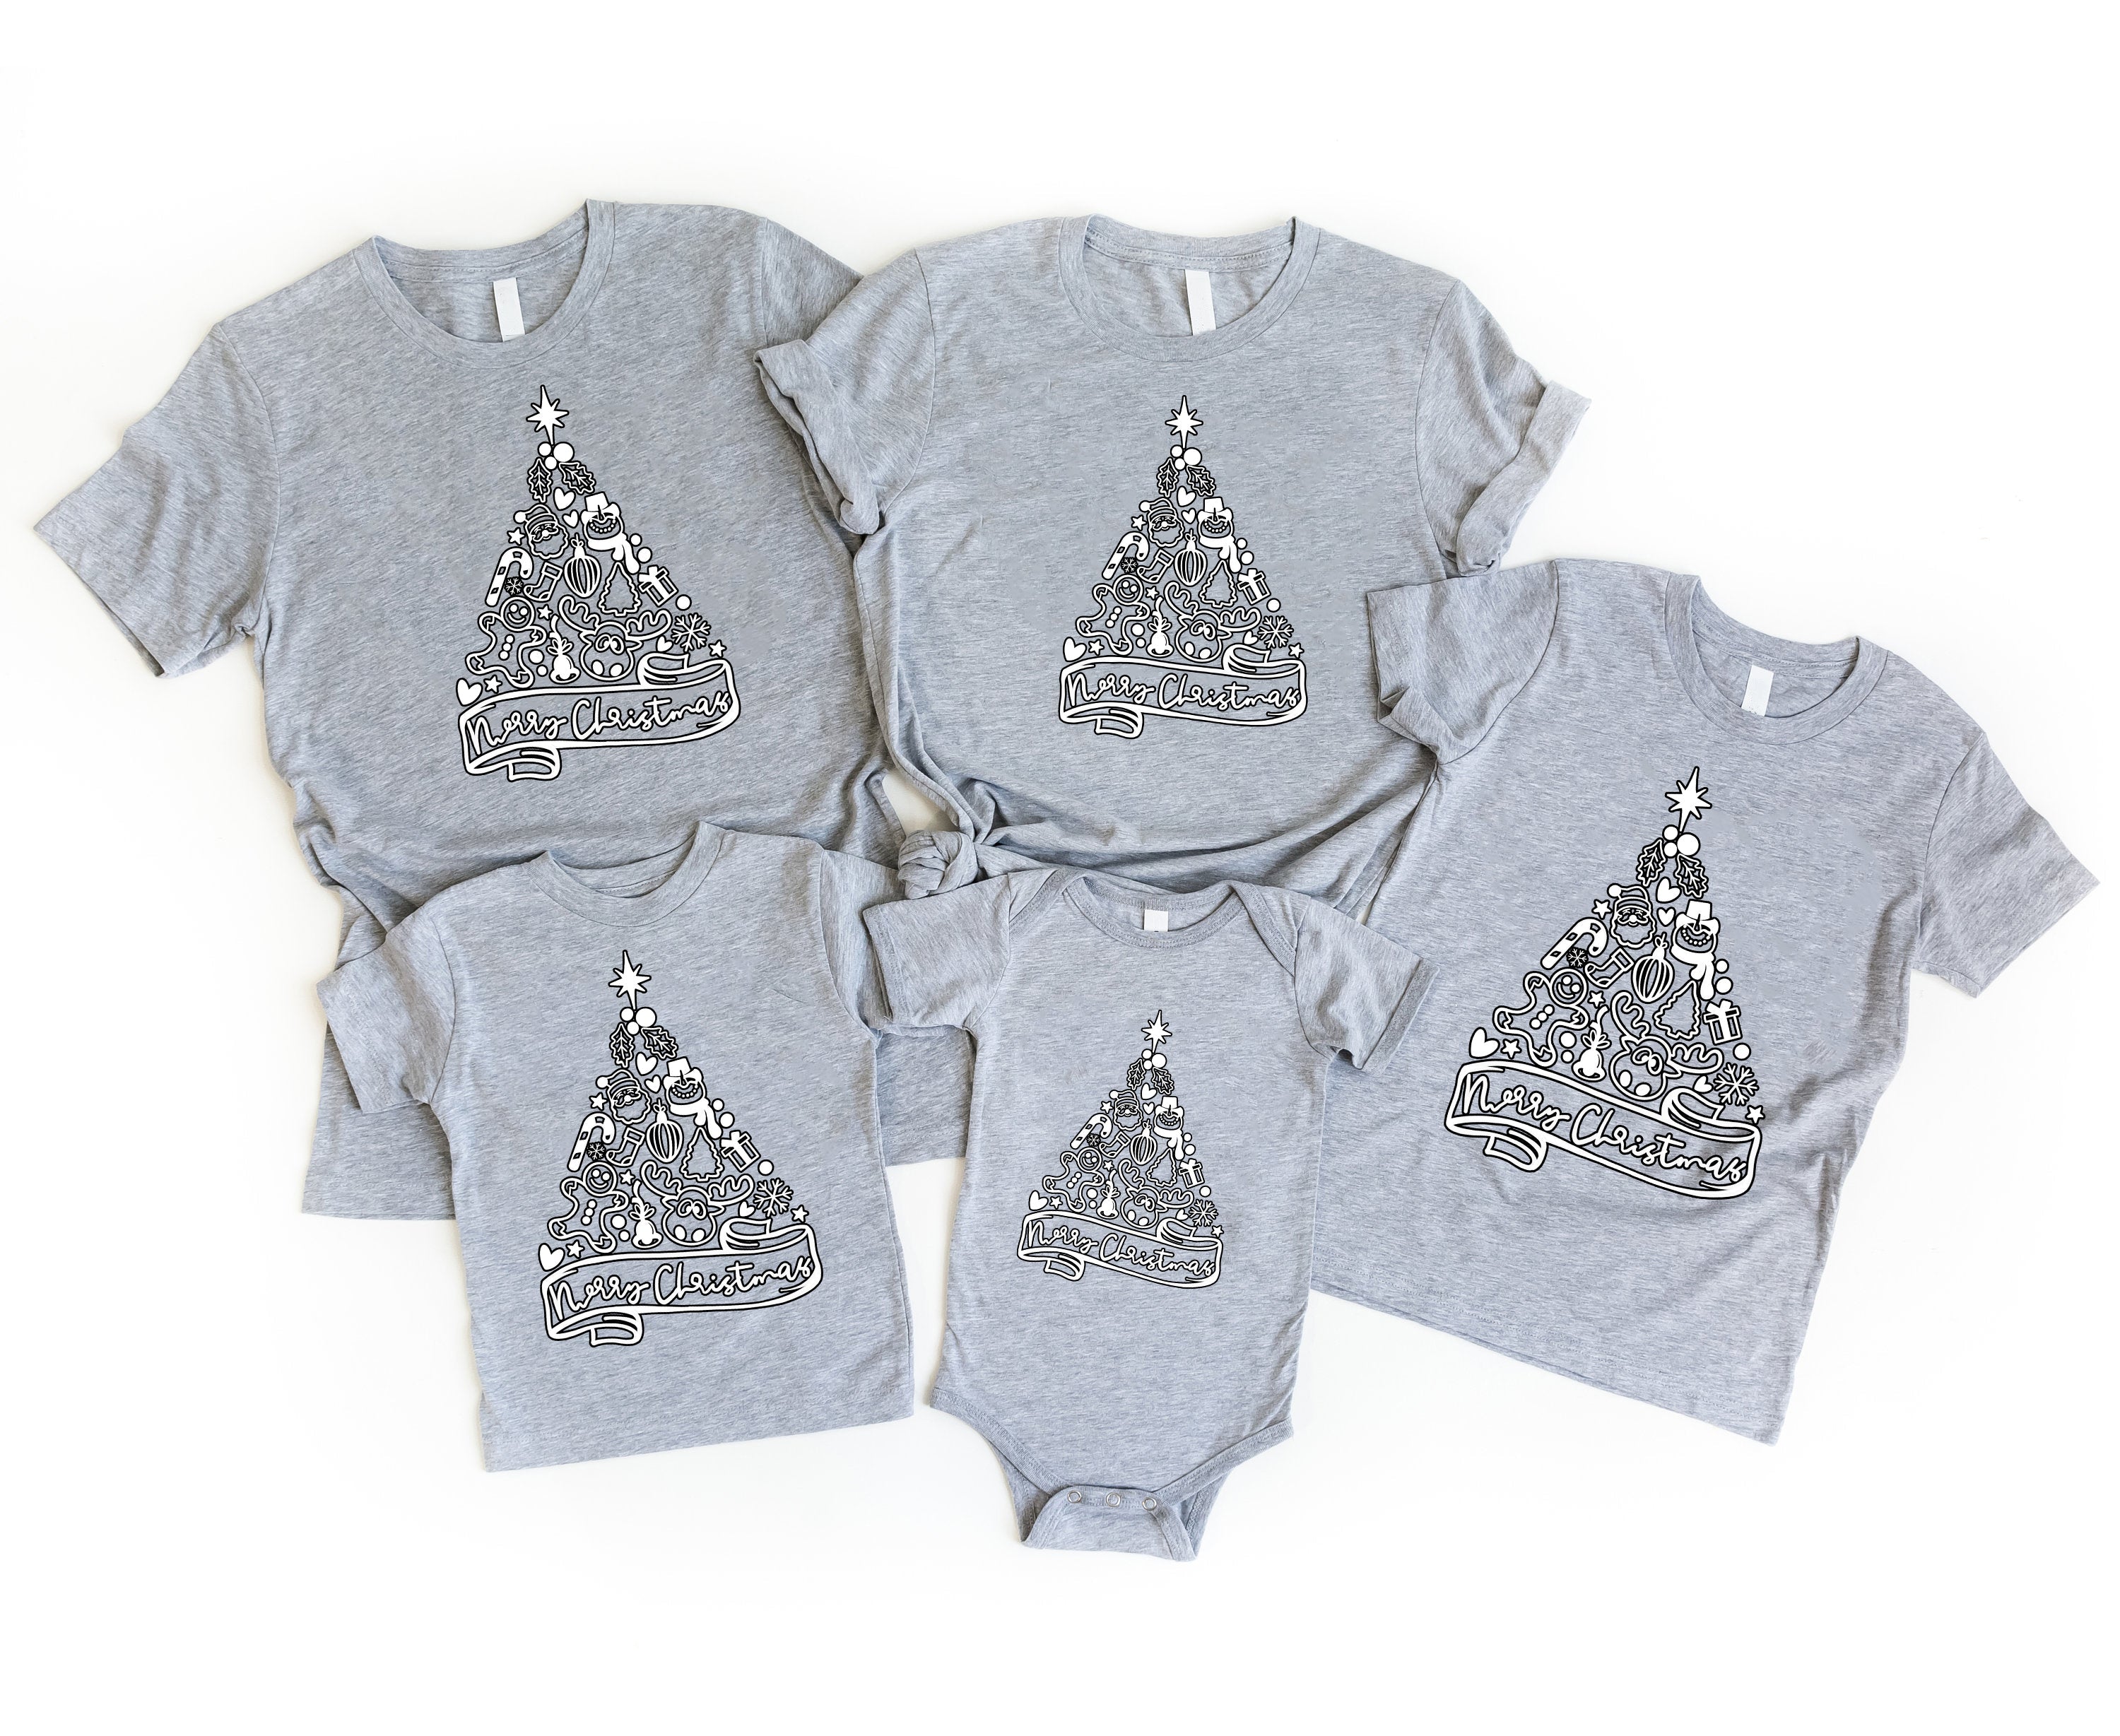 'Merry Chirstmas' And Gift-wrapped Christmas Tree Pattern Family Christmas Matching Pajamas Tops Cute Gray Short Sleeve T-shirts With Dog Bandana